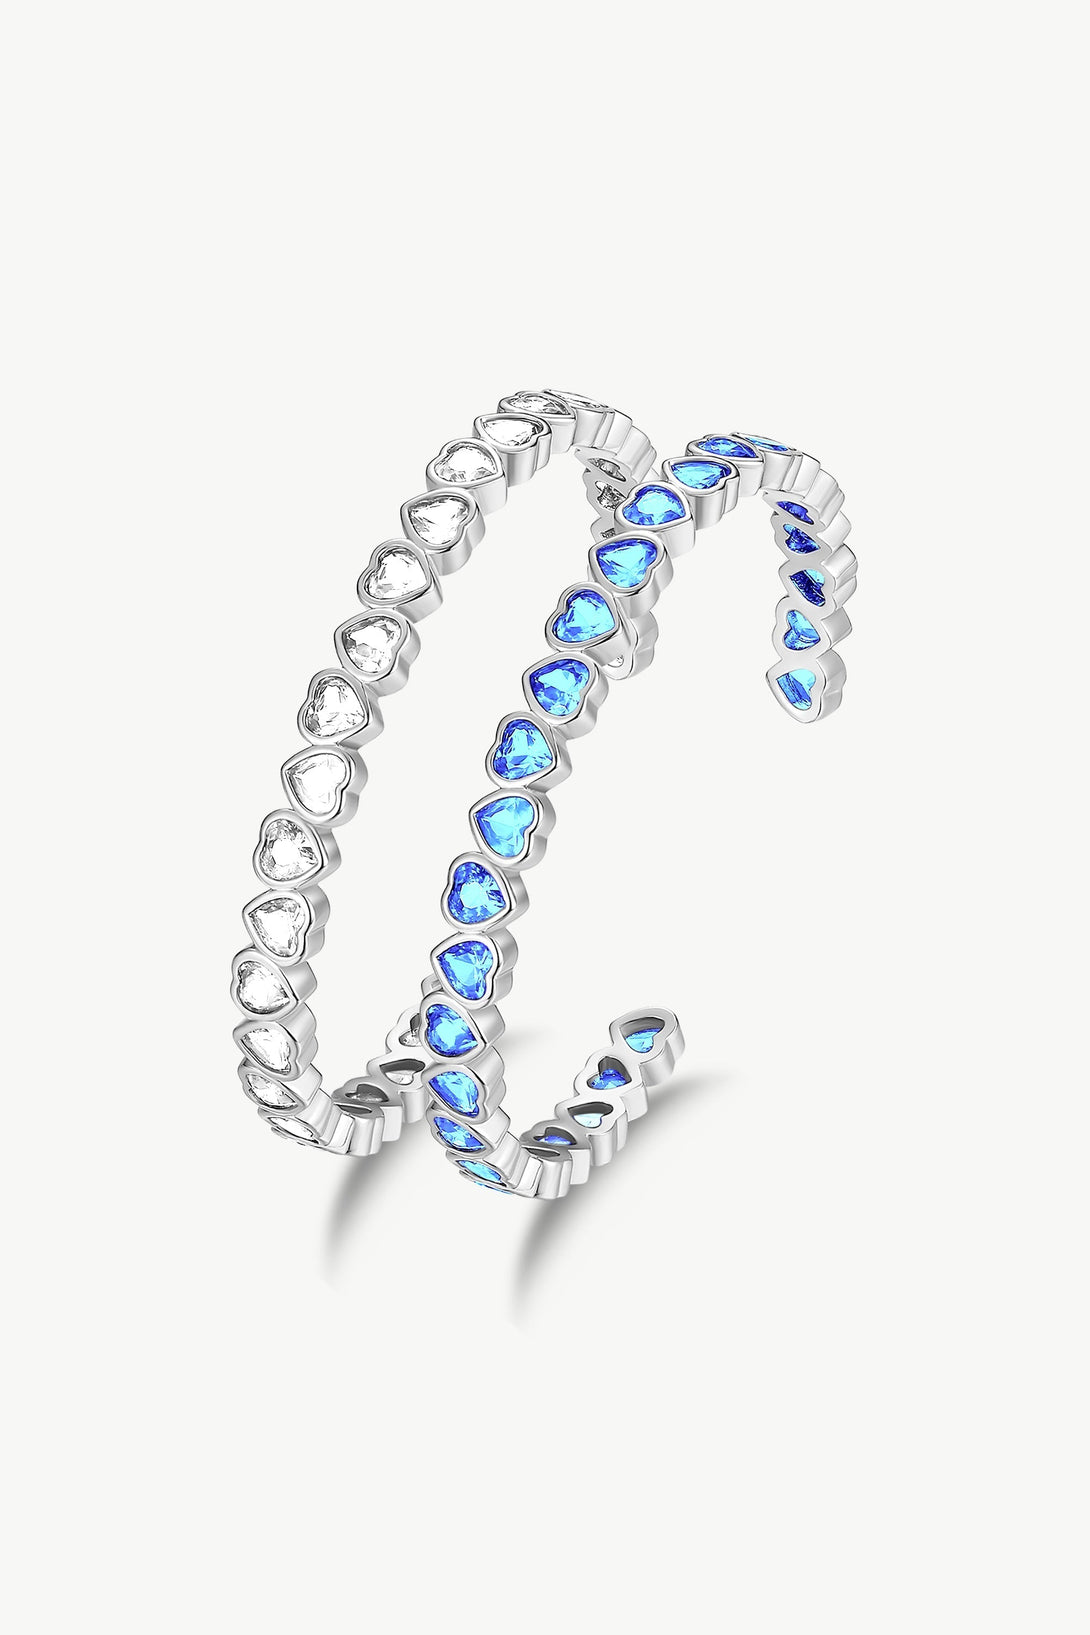 Silver Heart Shaped Zirconia Bangle Bracelet Set - Classicharms